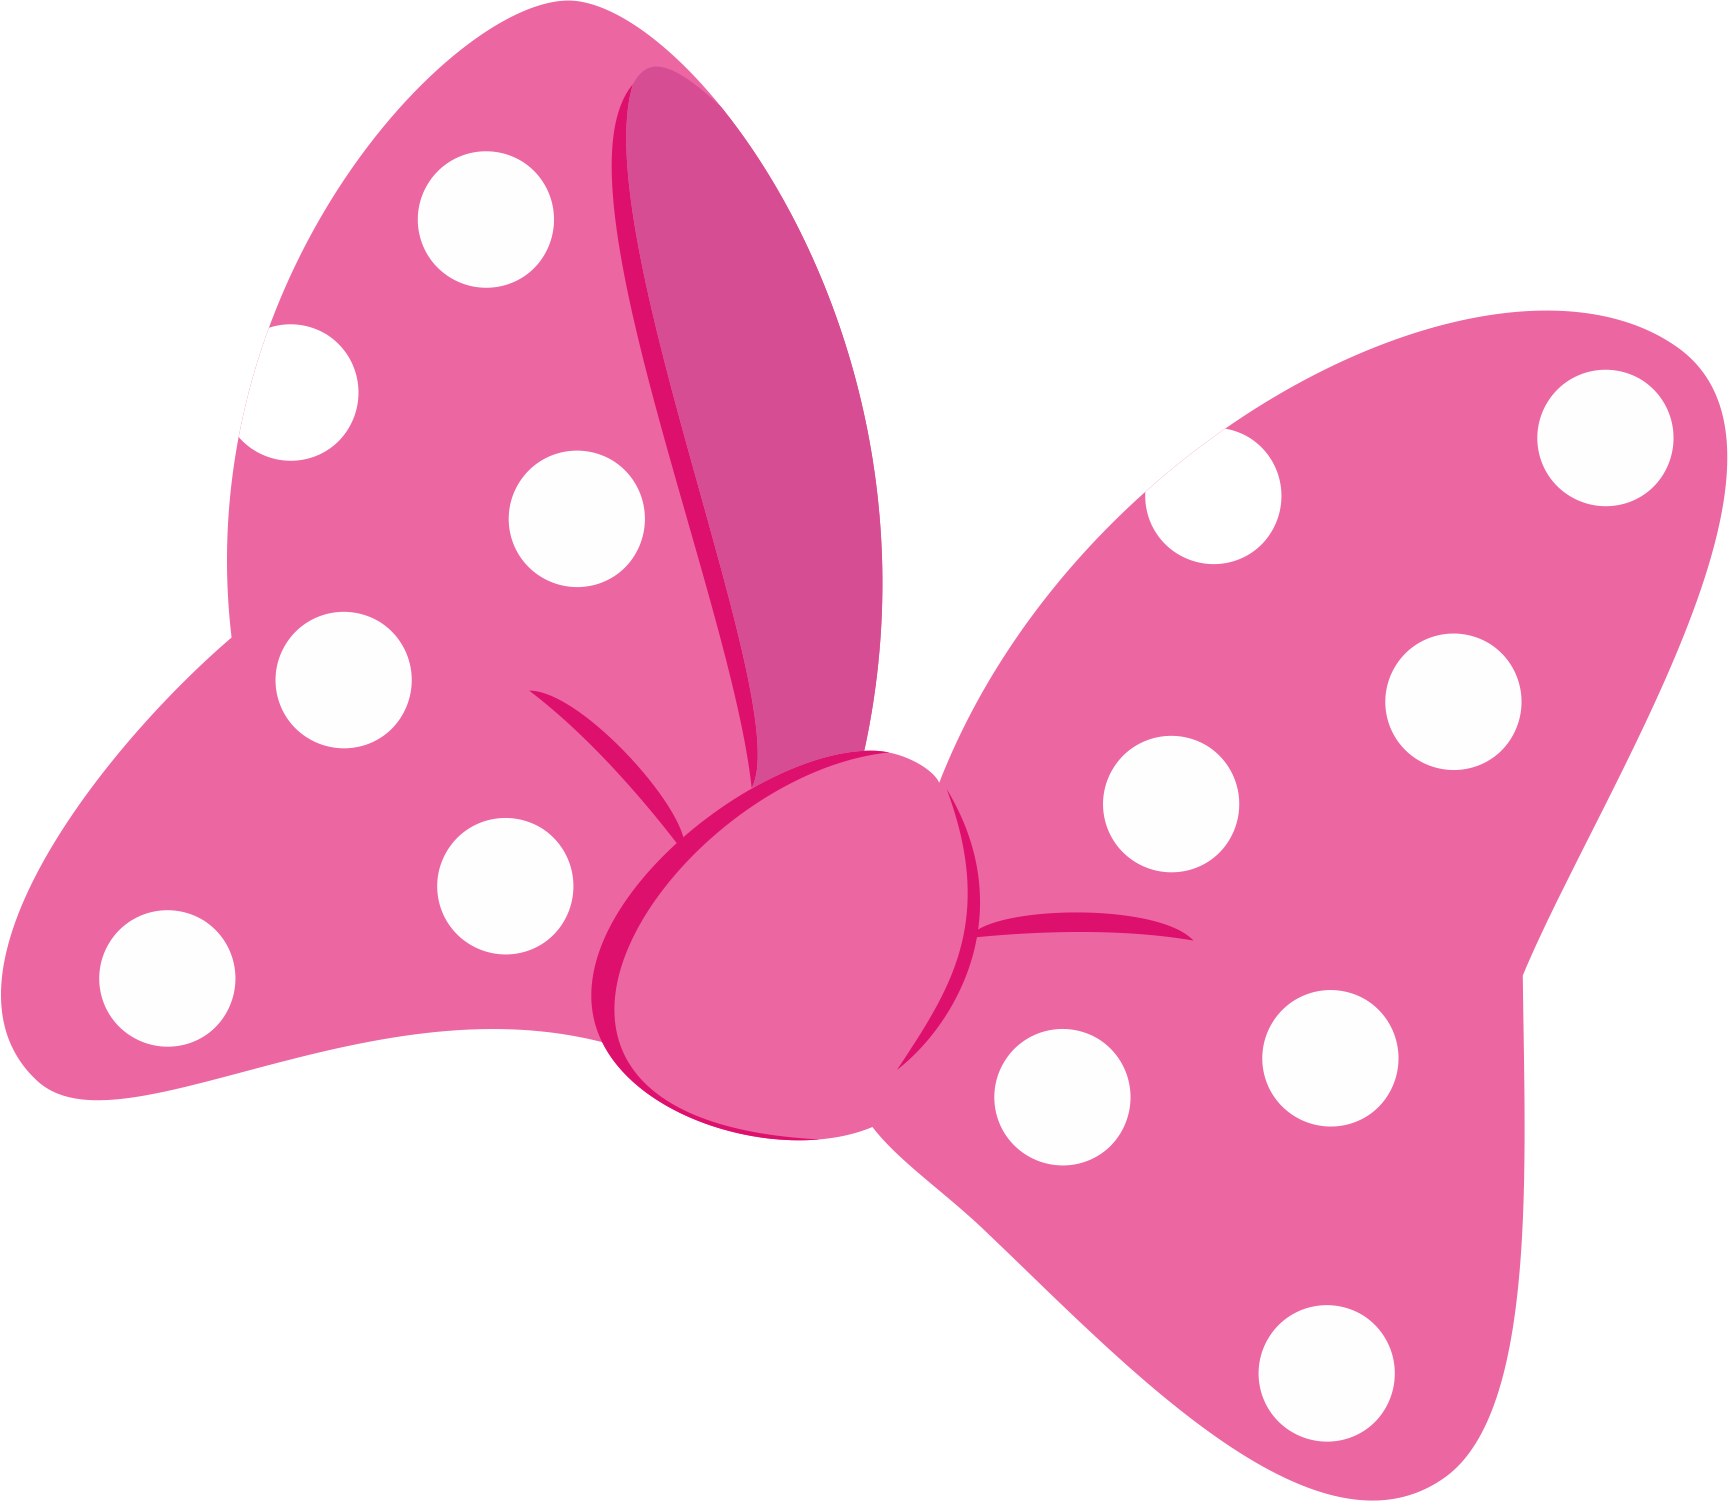 Pink Polka Dotted Bow Illustration PNG image